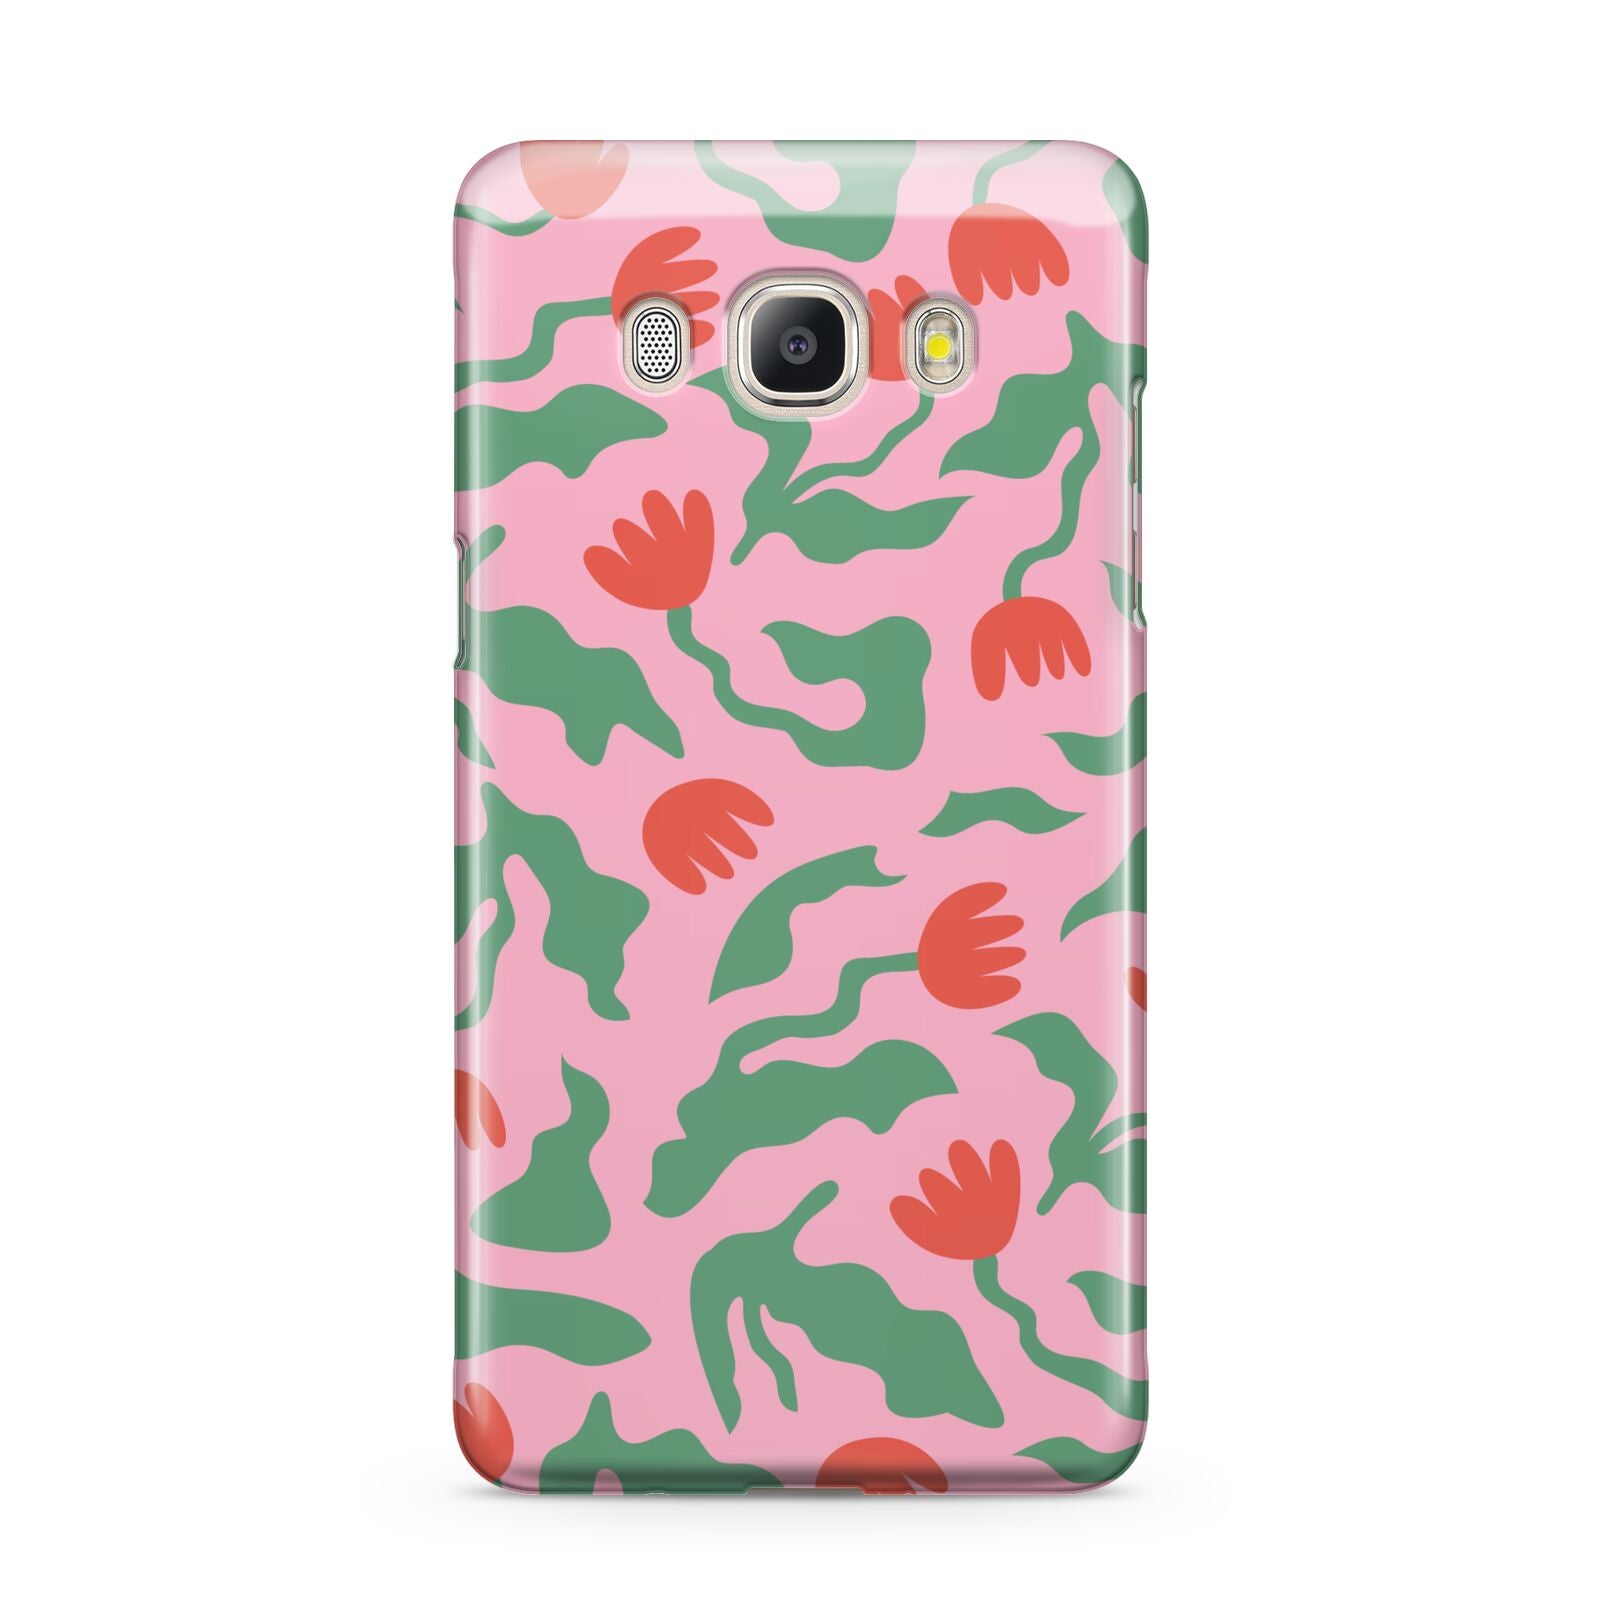 Simple Floral Samsung Galaxy J5 2016 Case